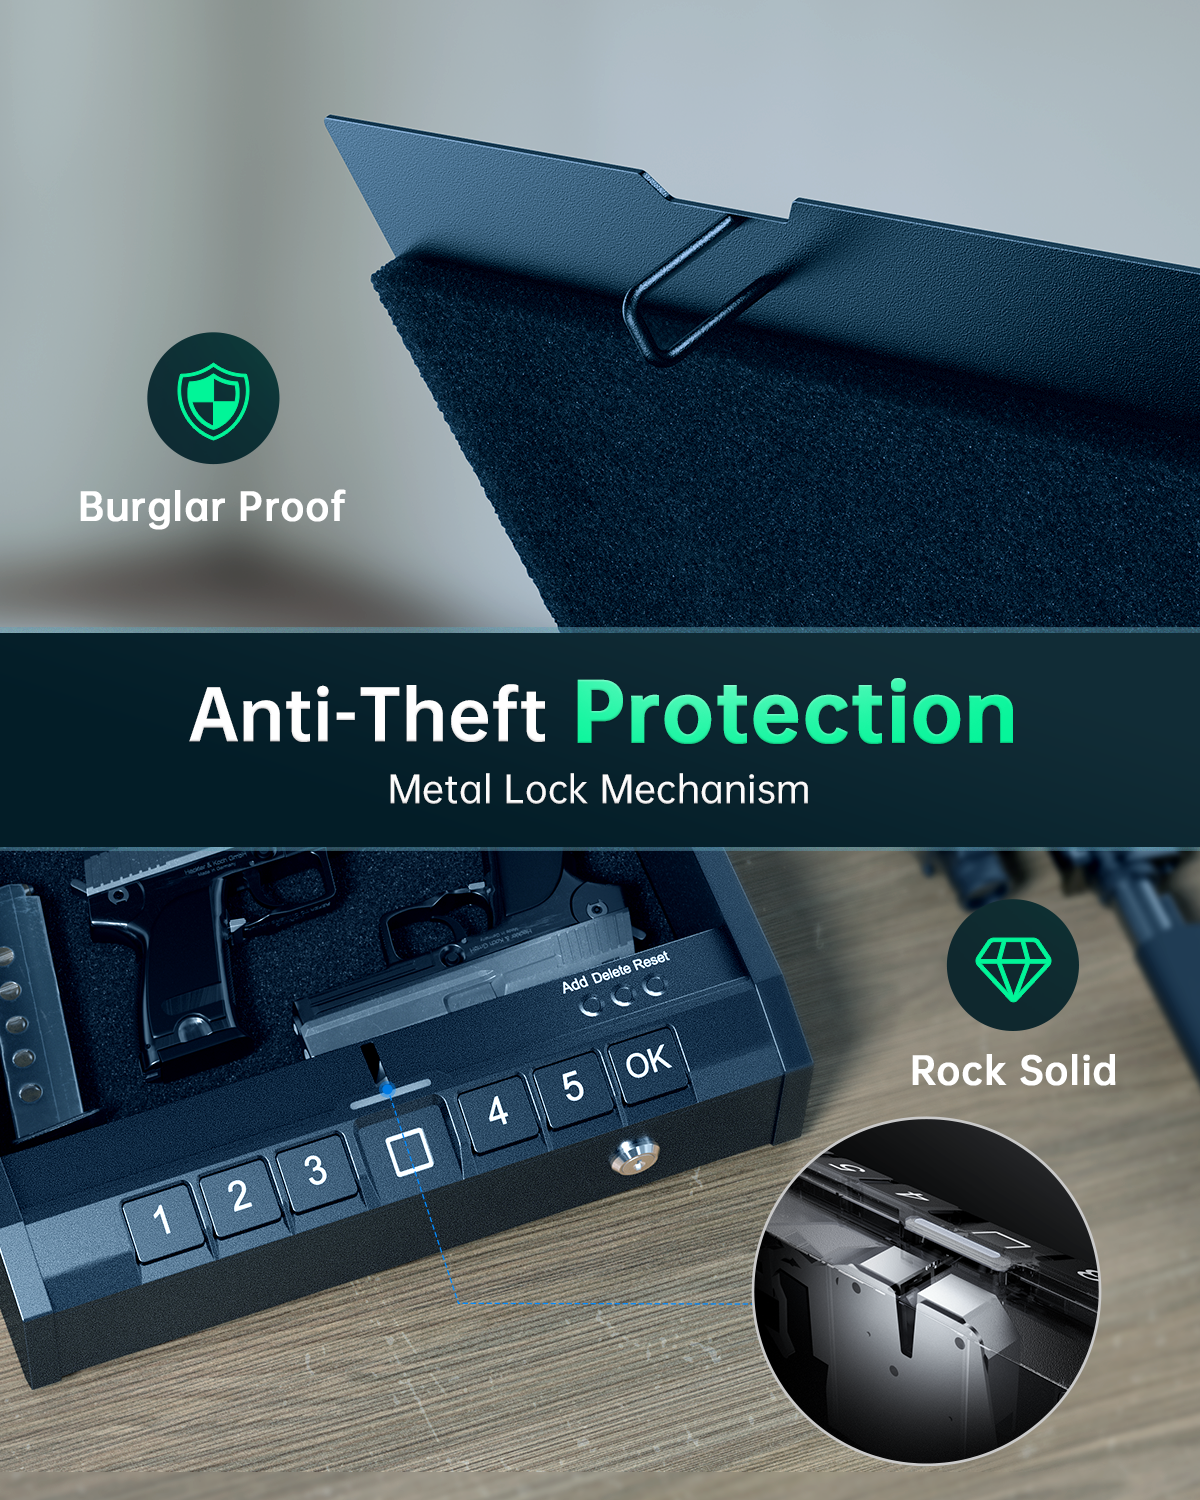  AINIRO Gun Safe for Pistols - Biometric Safe for